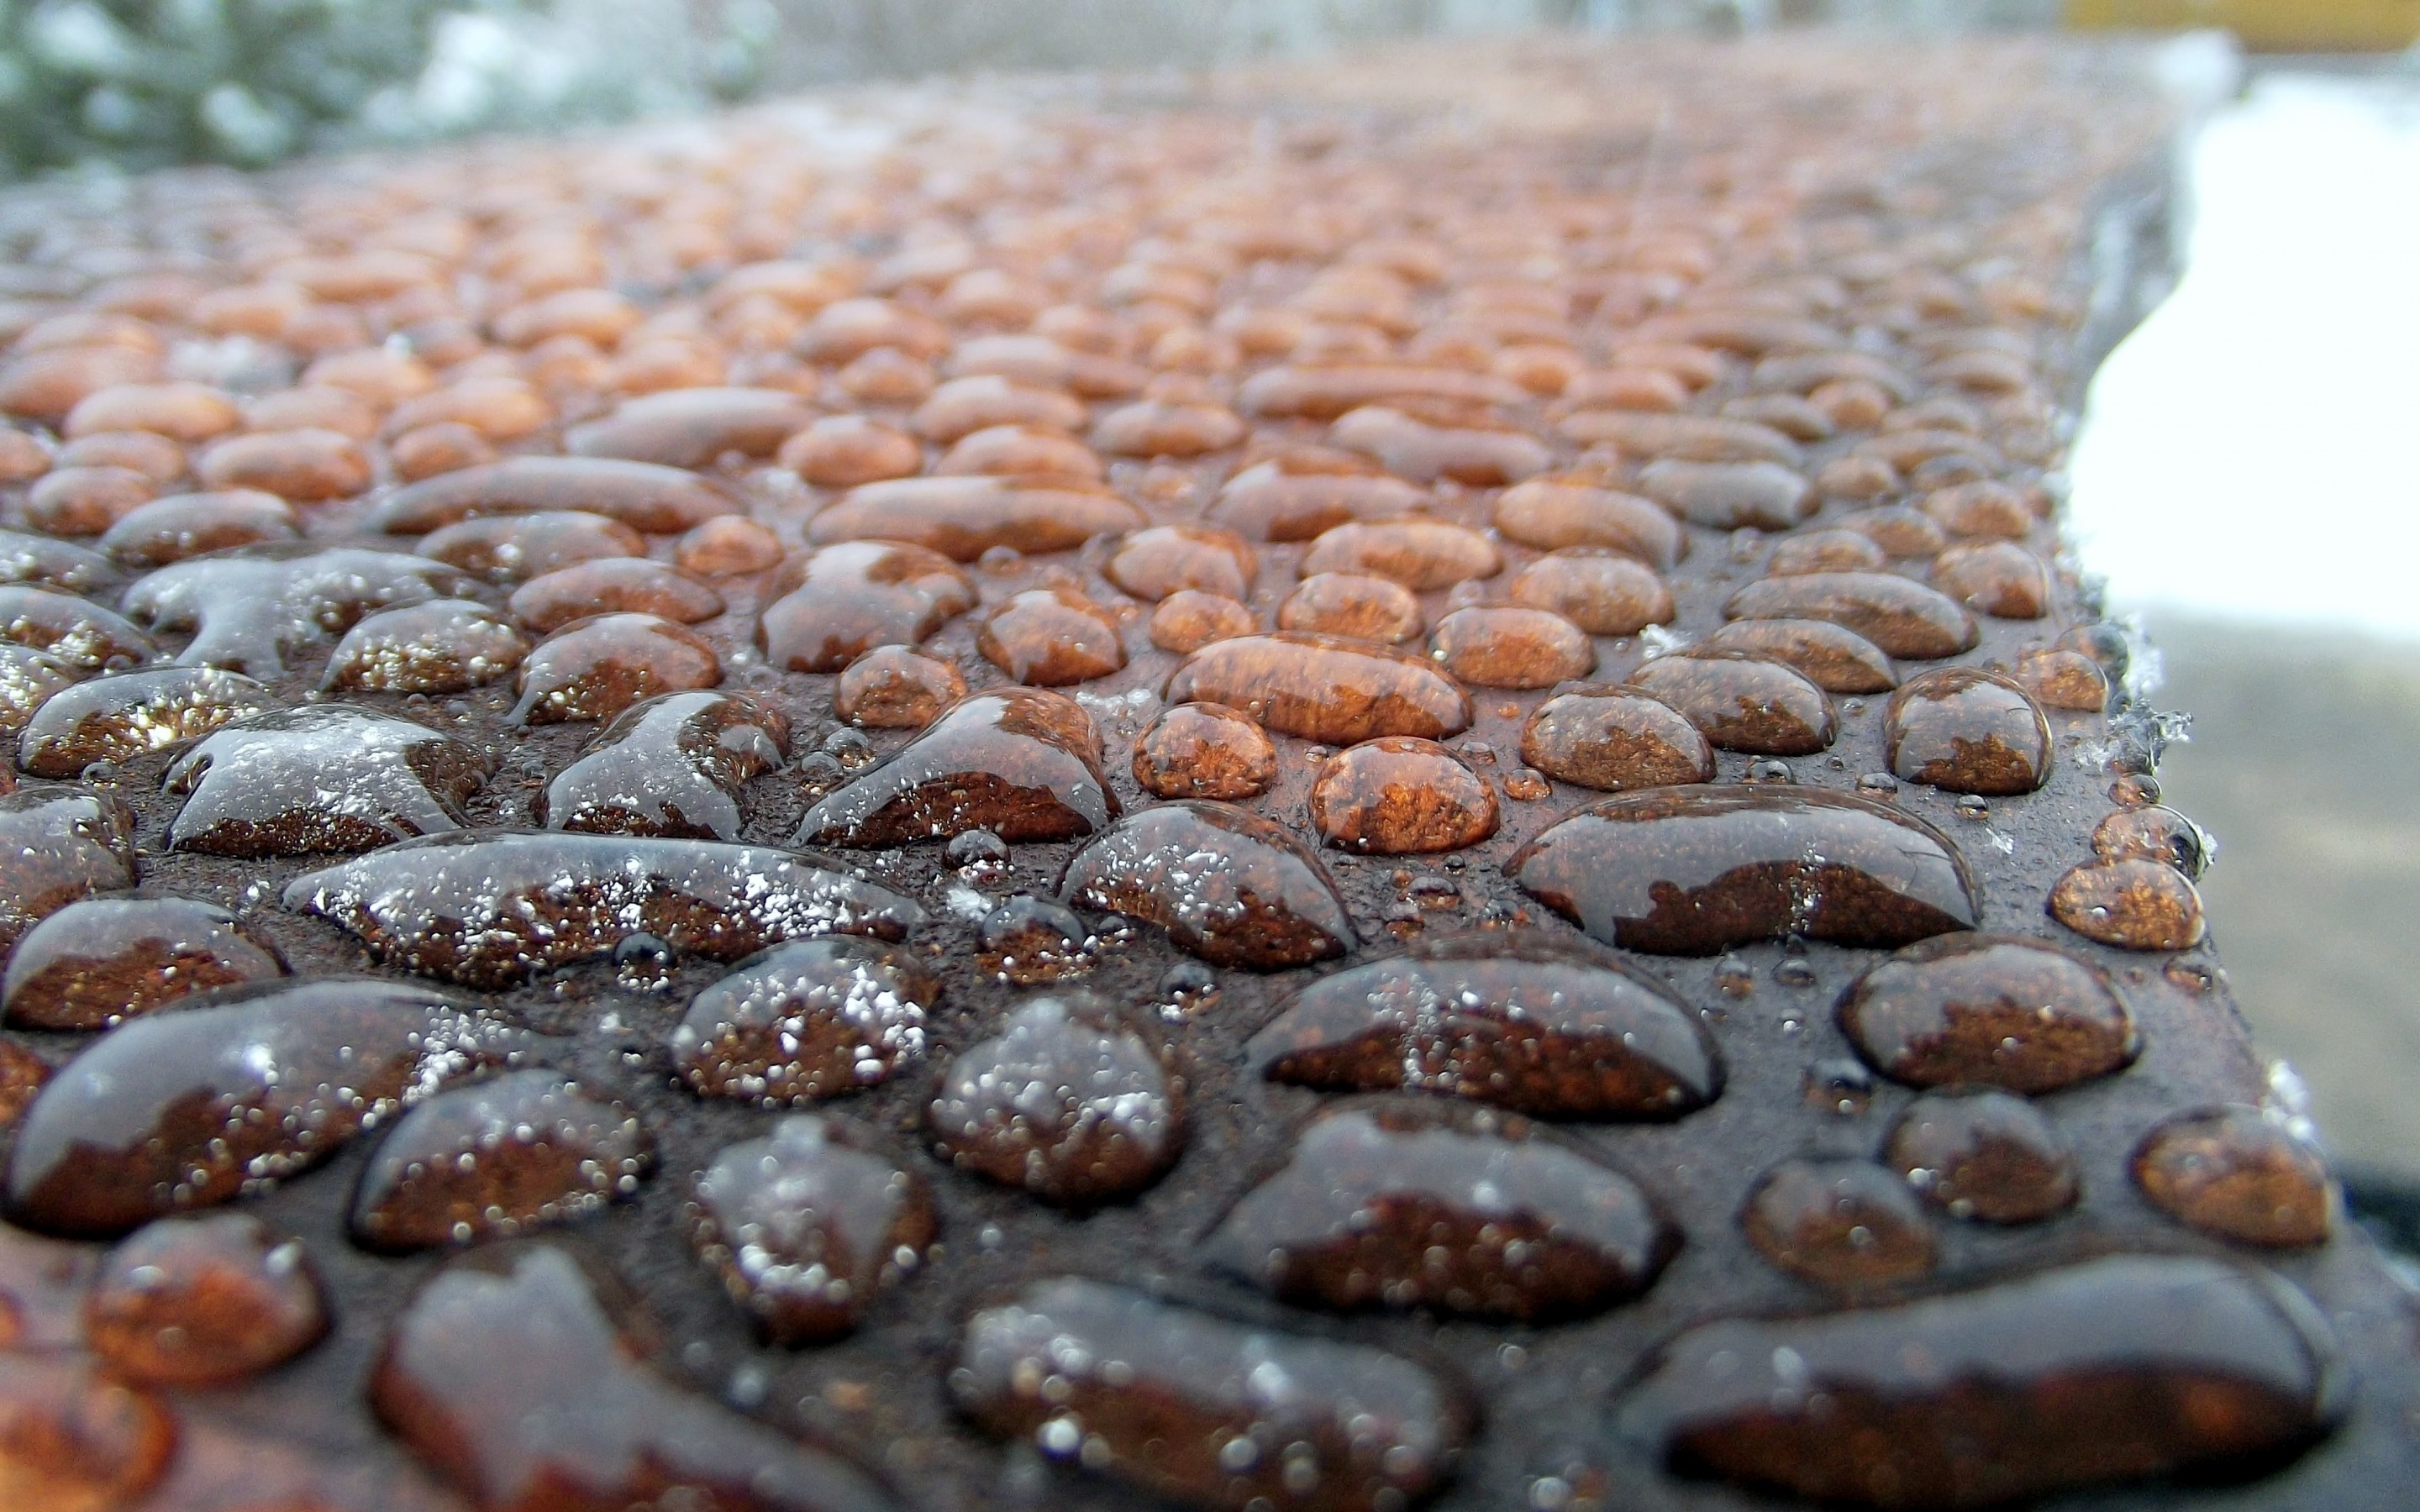 Rain Water Droplets for 2880 x 1800 Retina Display resolution